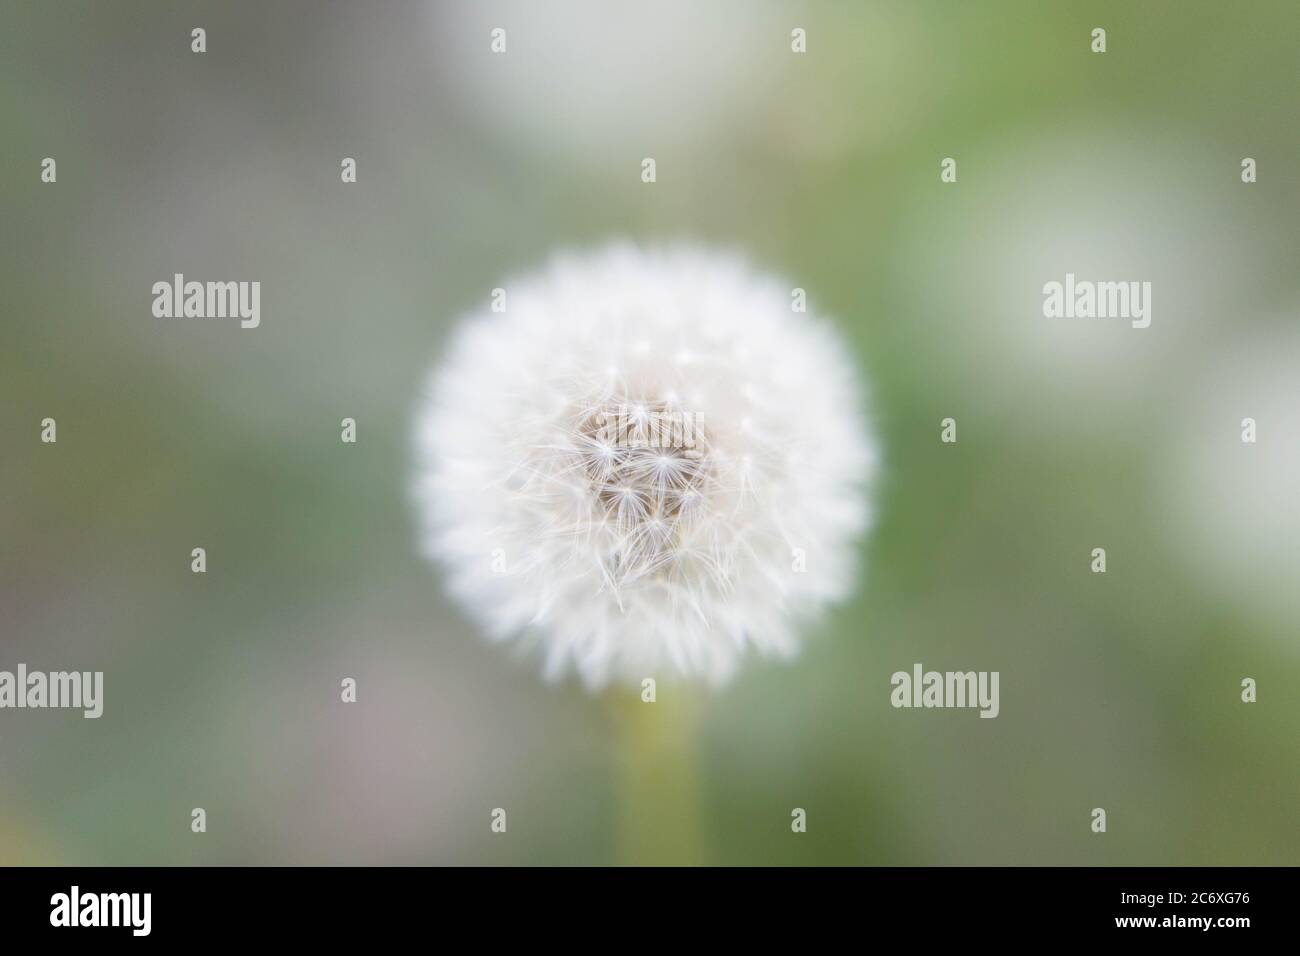 white fluff gentle refined and gentle sunlight illuminates the ball of  dandelion Stock Photo - Alamy